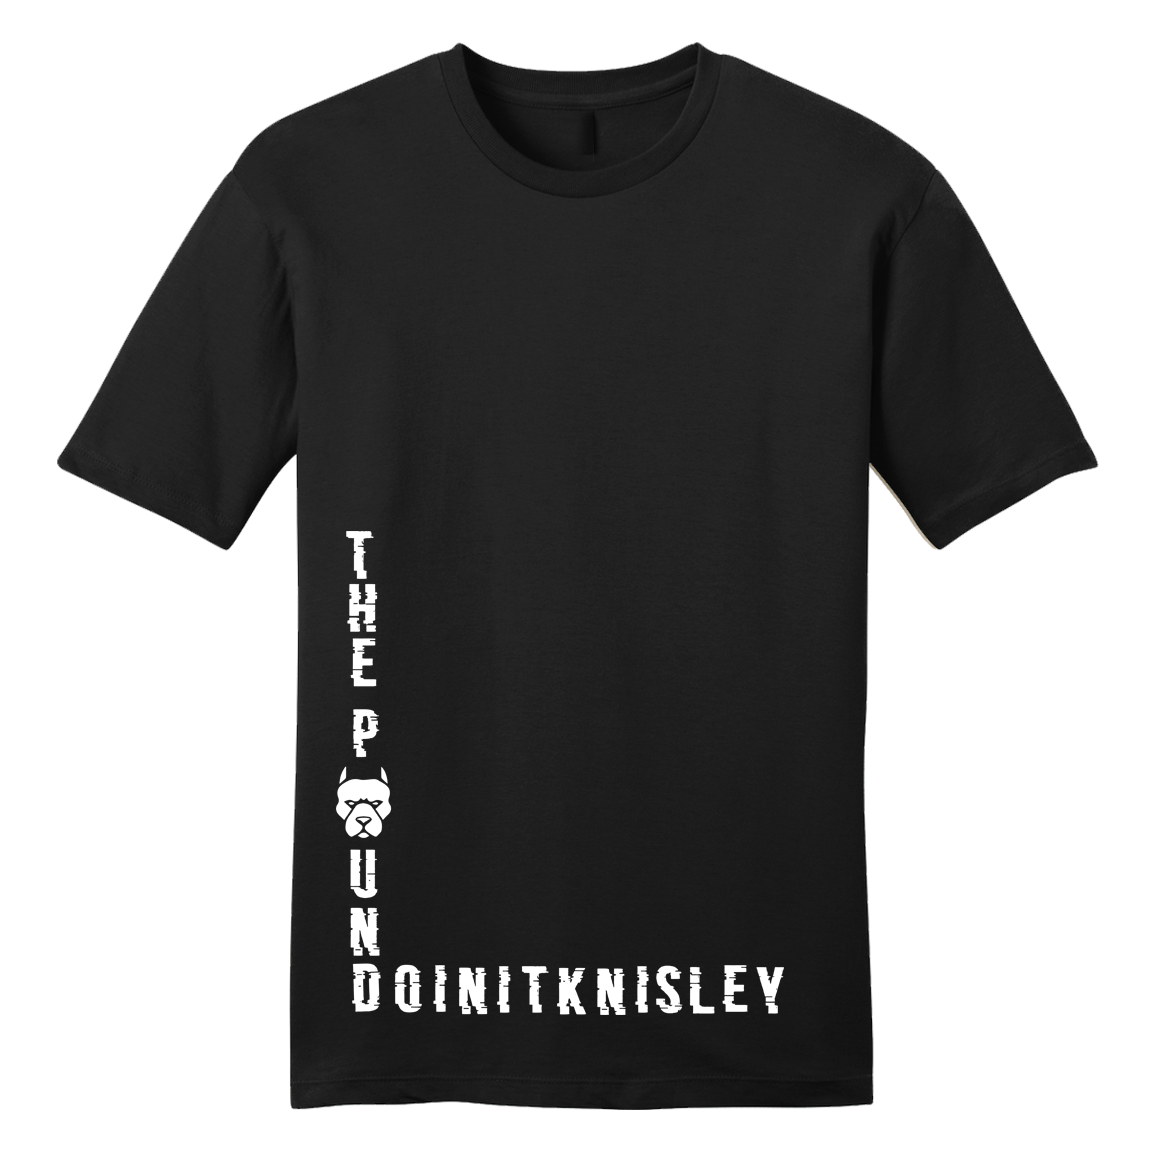 DoinItKnisley - The Pound Bottom Text tee